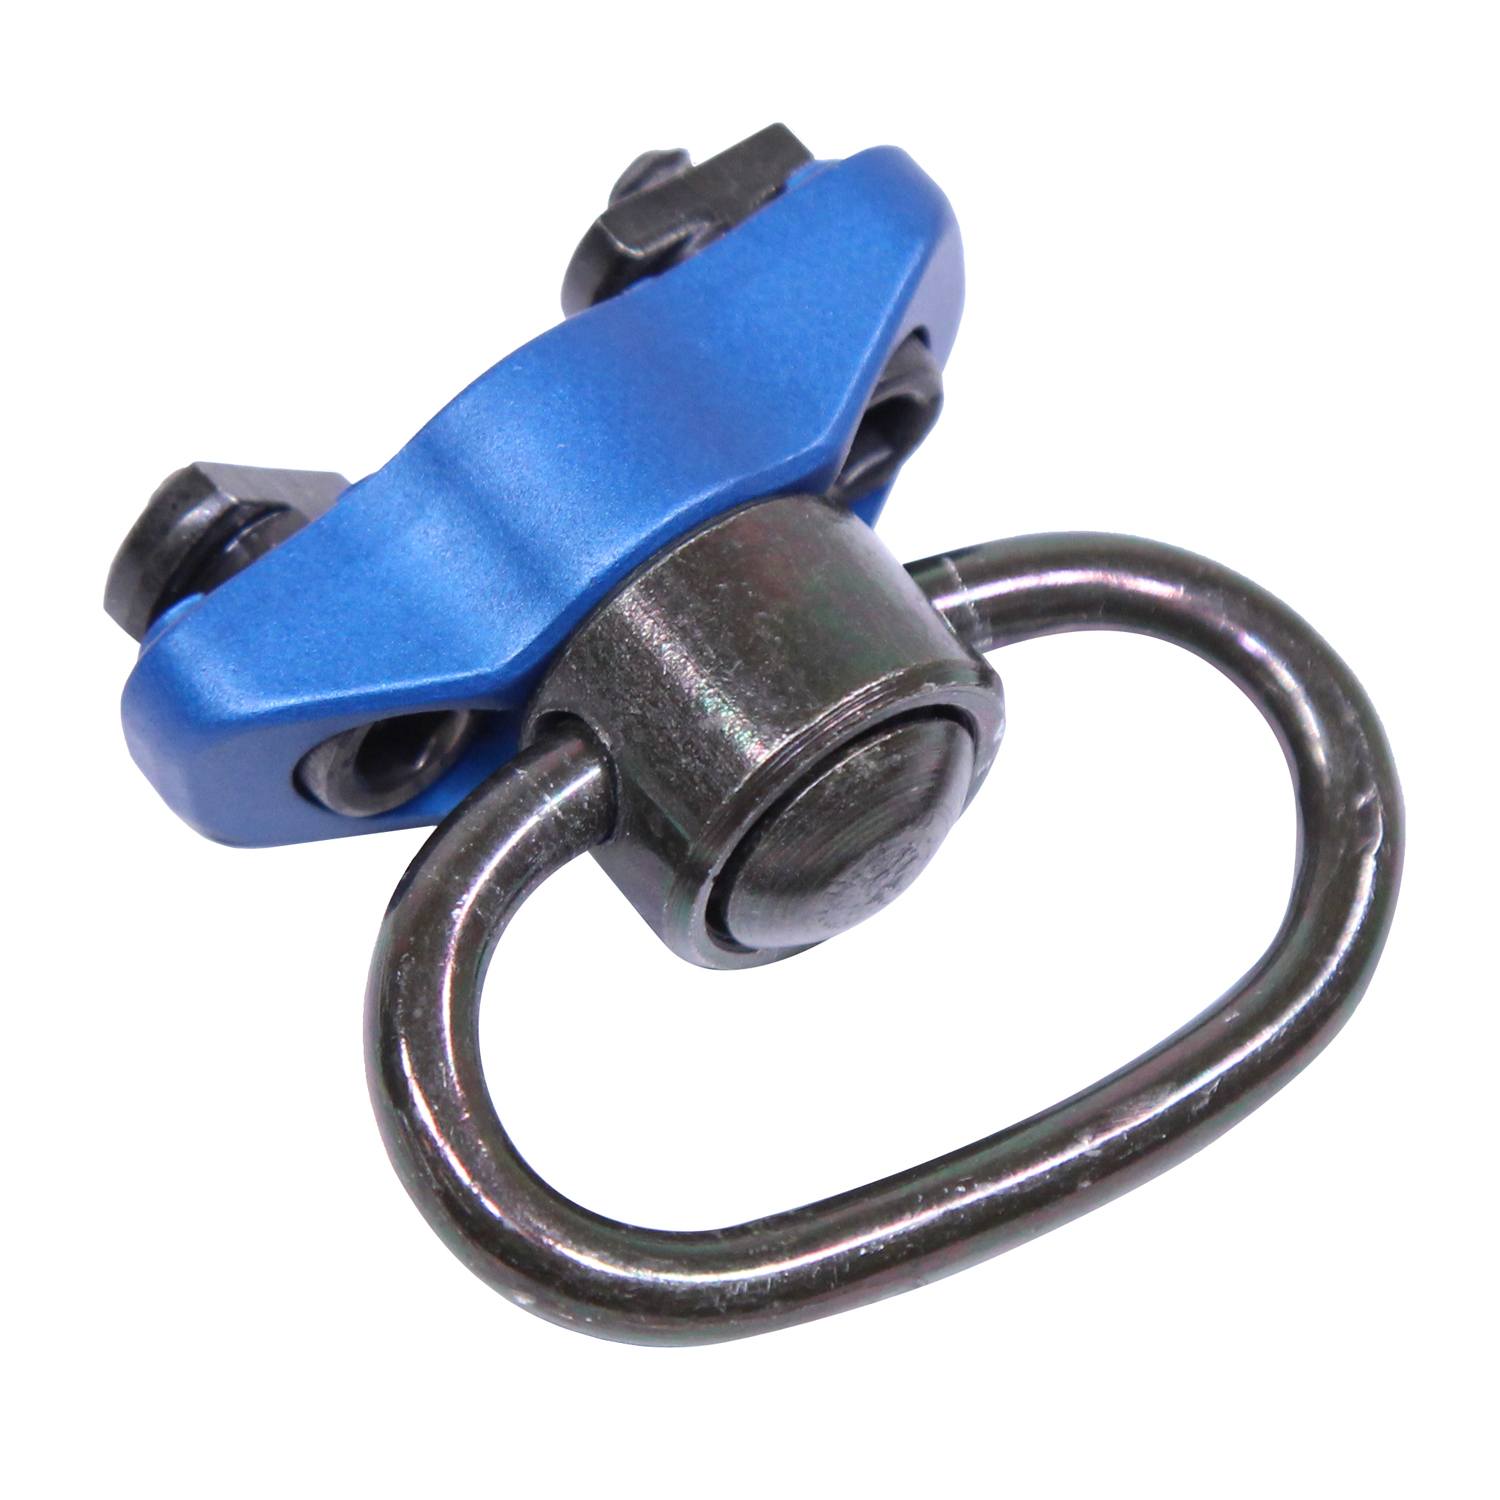 Sling Swivel 1.25 Inch Quick Detachable Kit Attachment for Mlok Handguard Blue Color